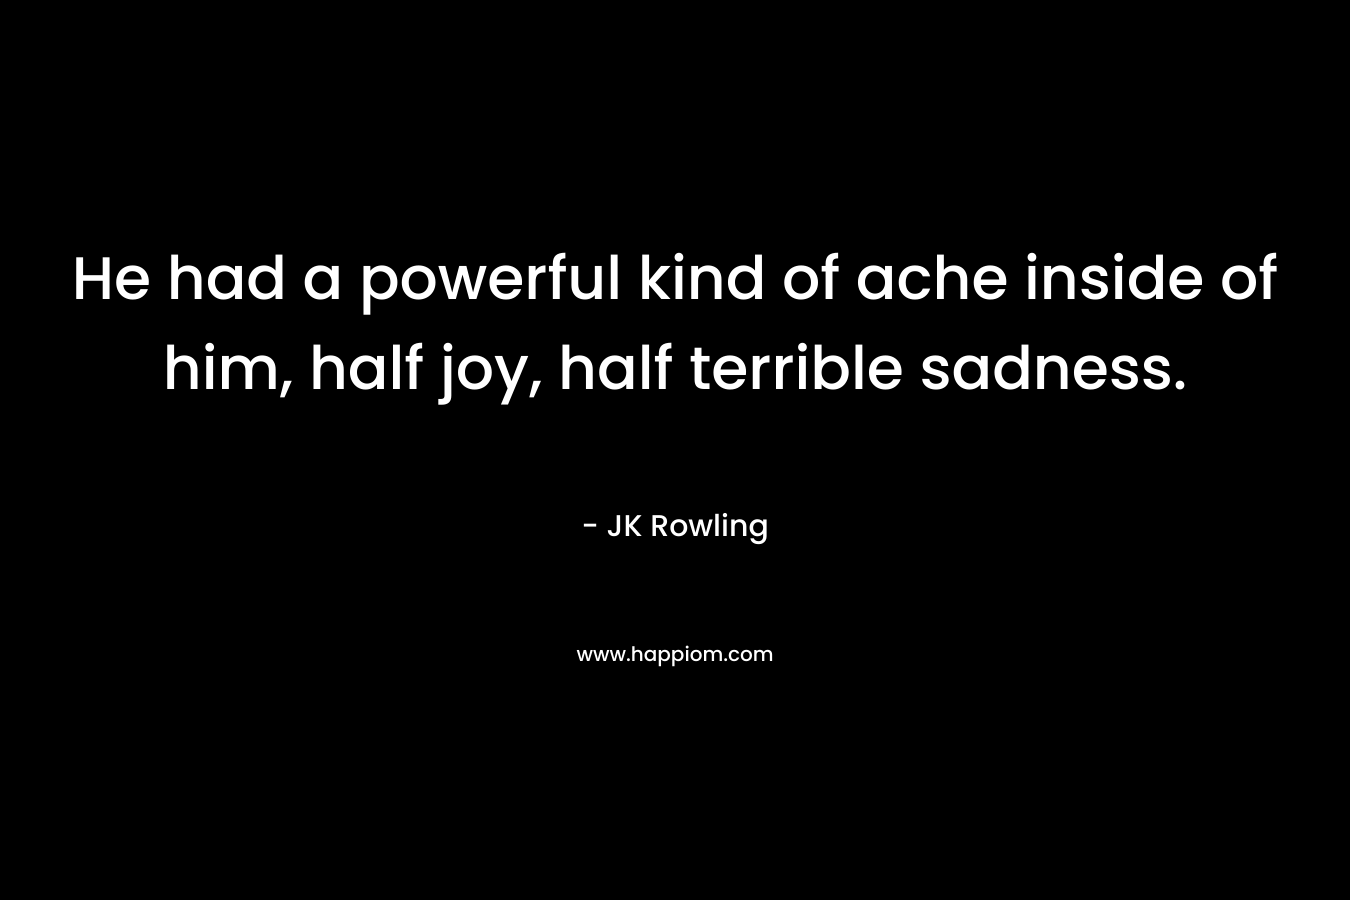 He had a powerful kind of ache inside of him, half joy, half terrible sadness.